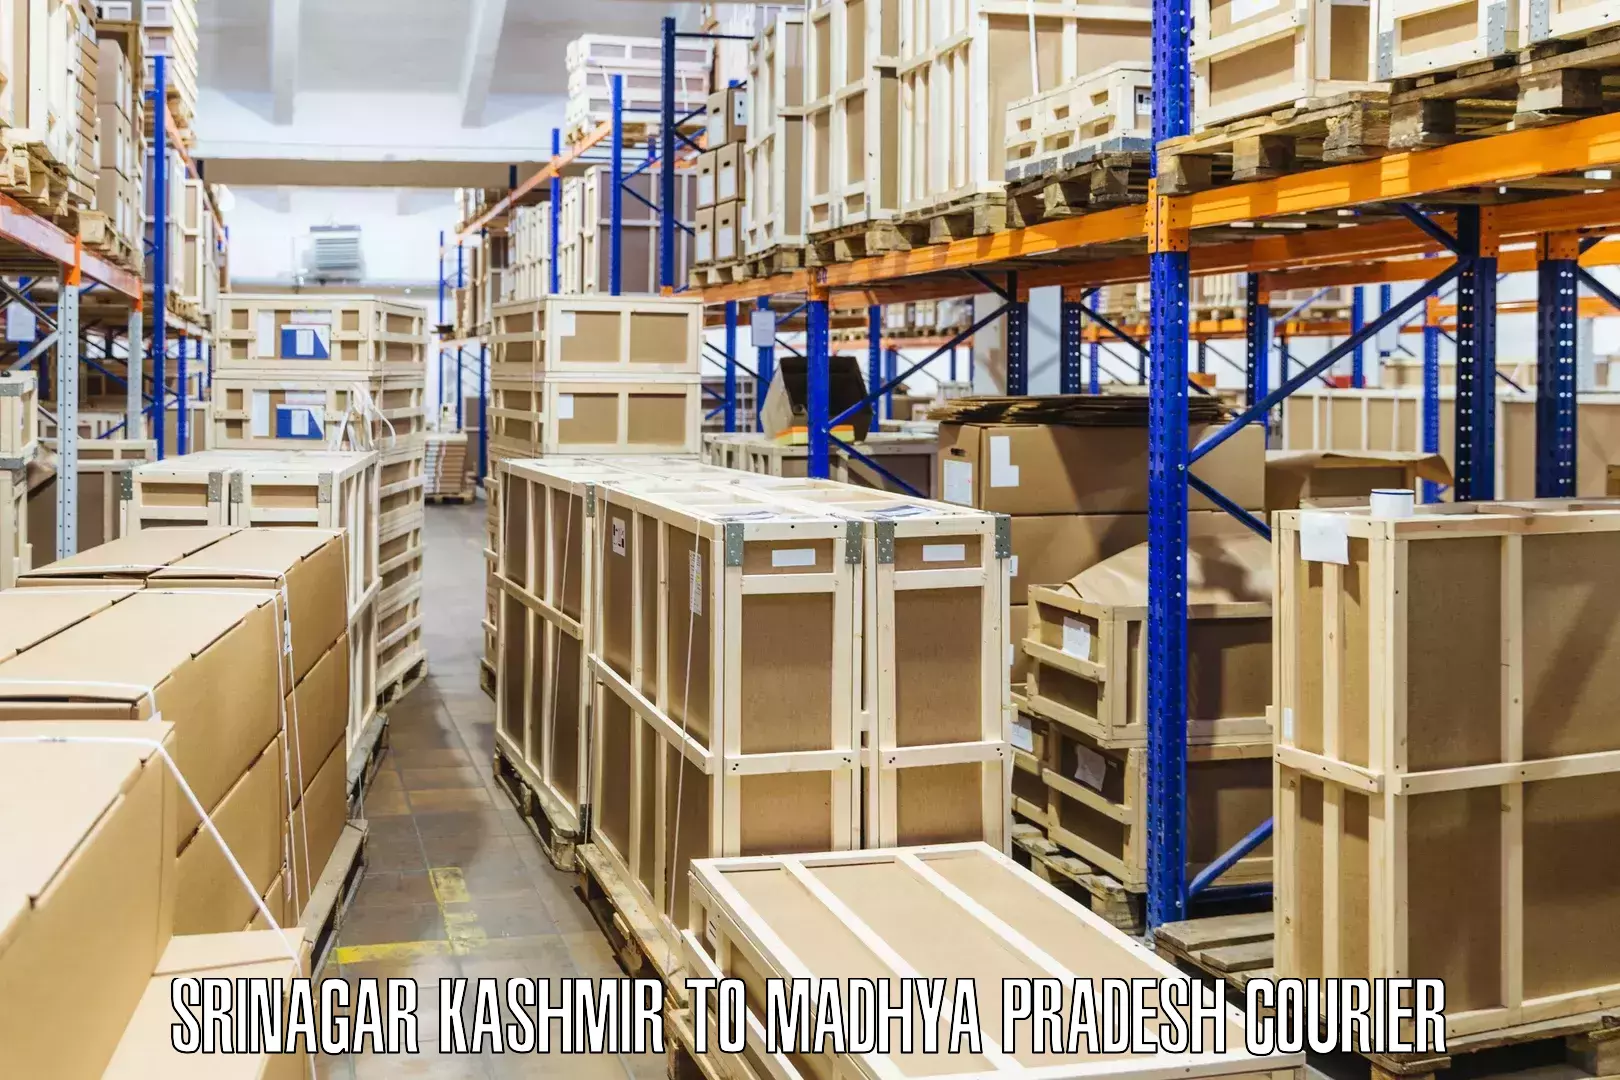 Residential courier service Srinagar Kashmir to Ratlam